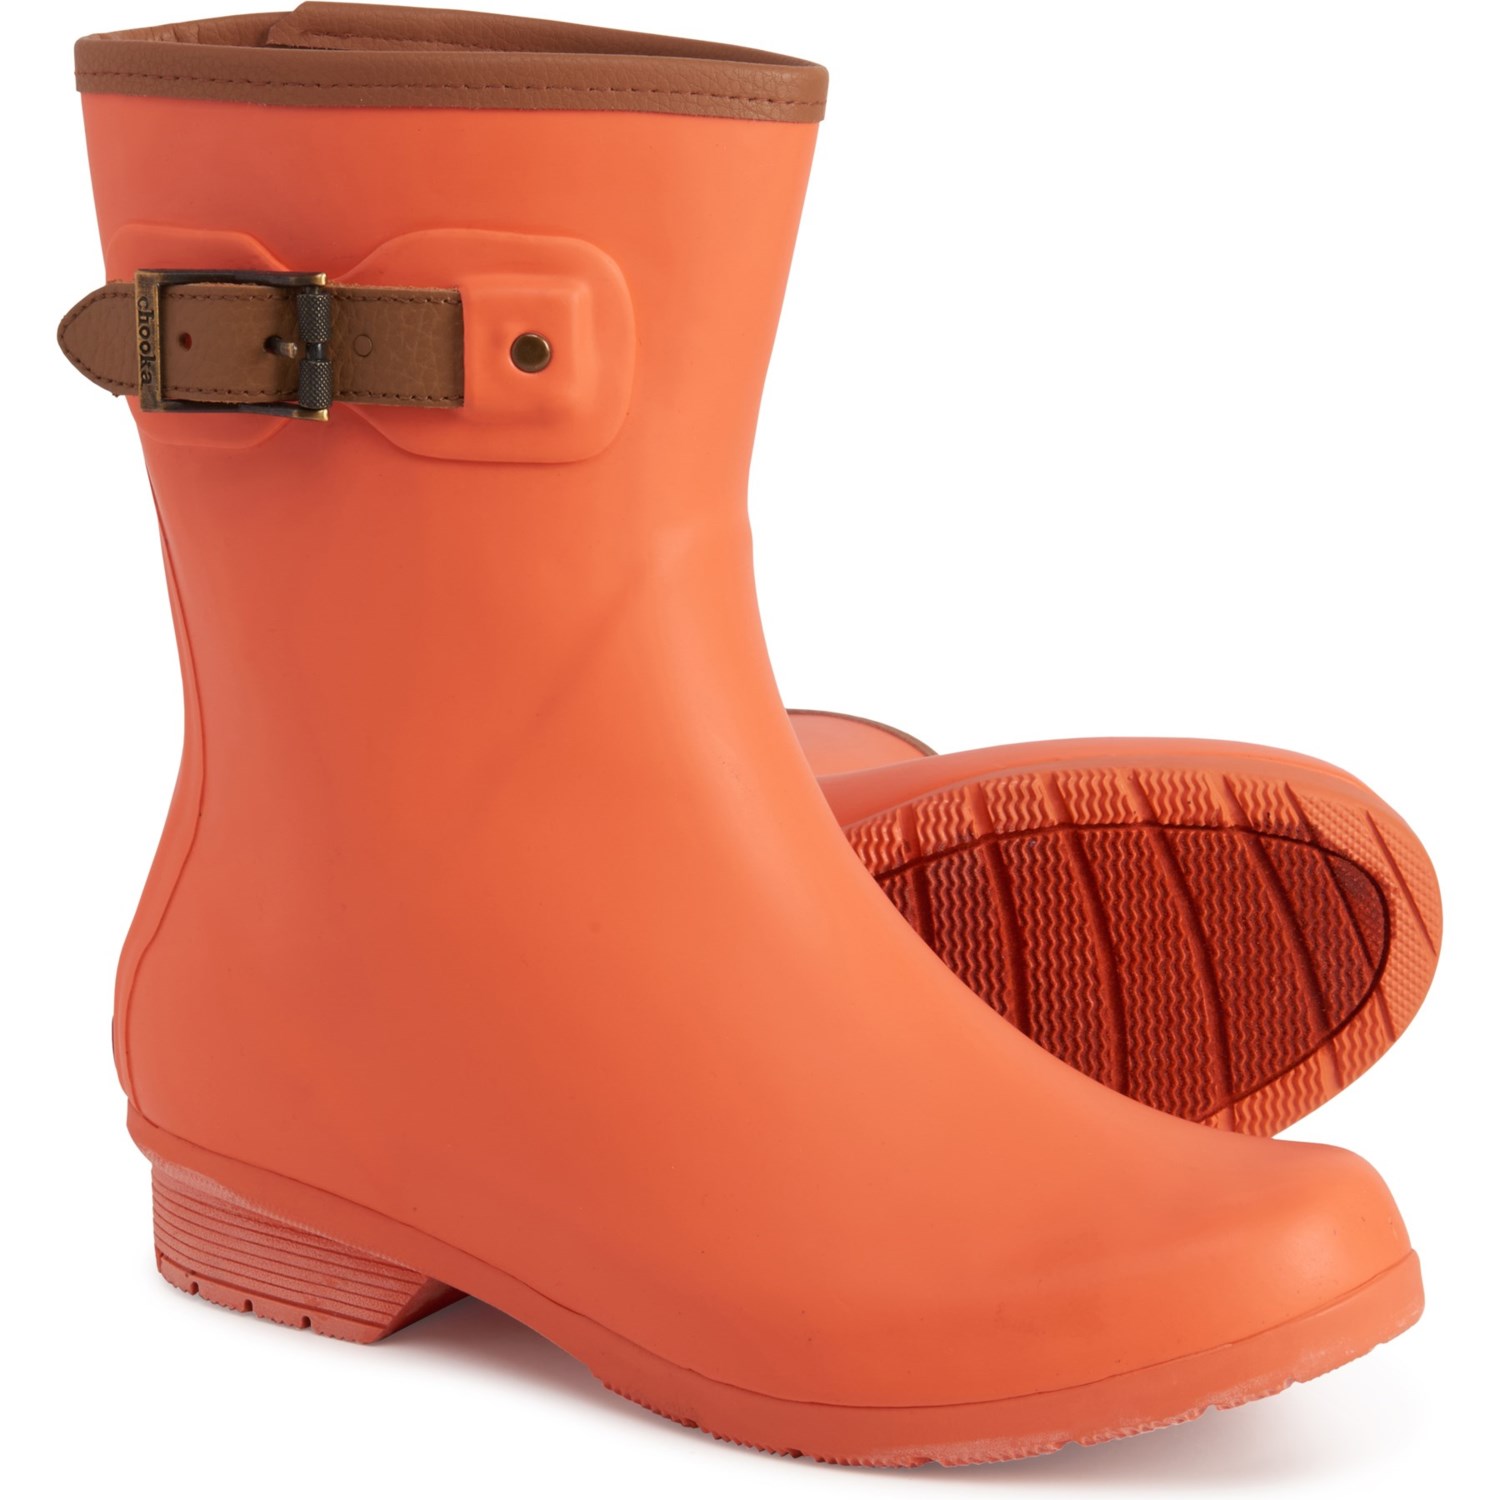 waterproof city boots